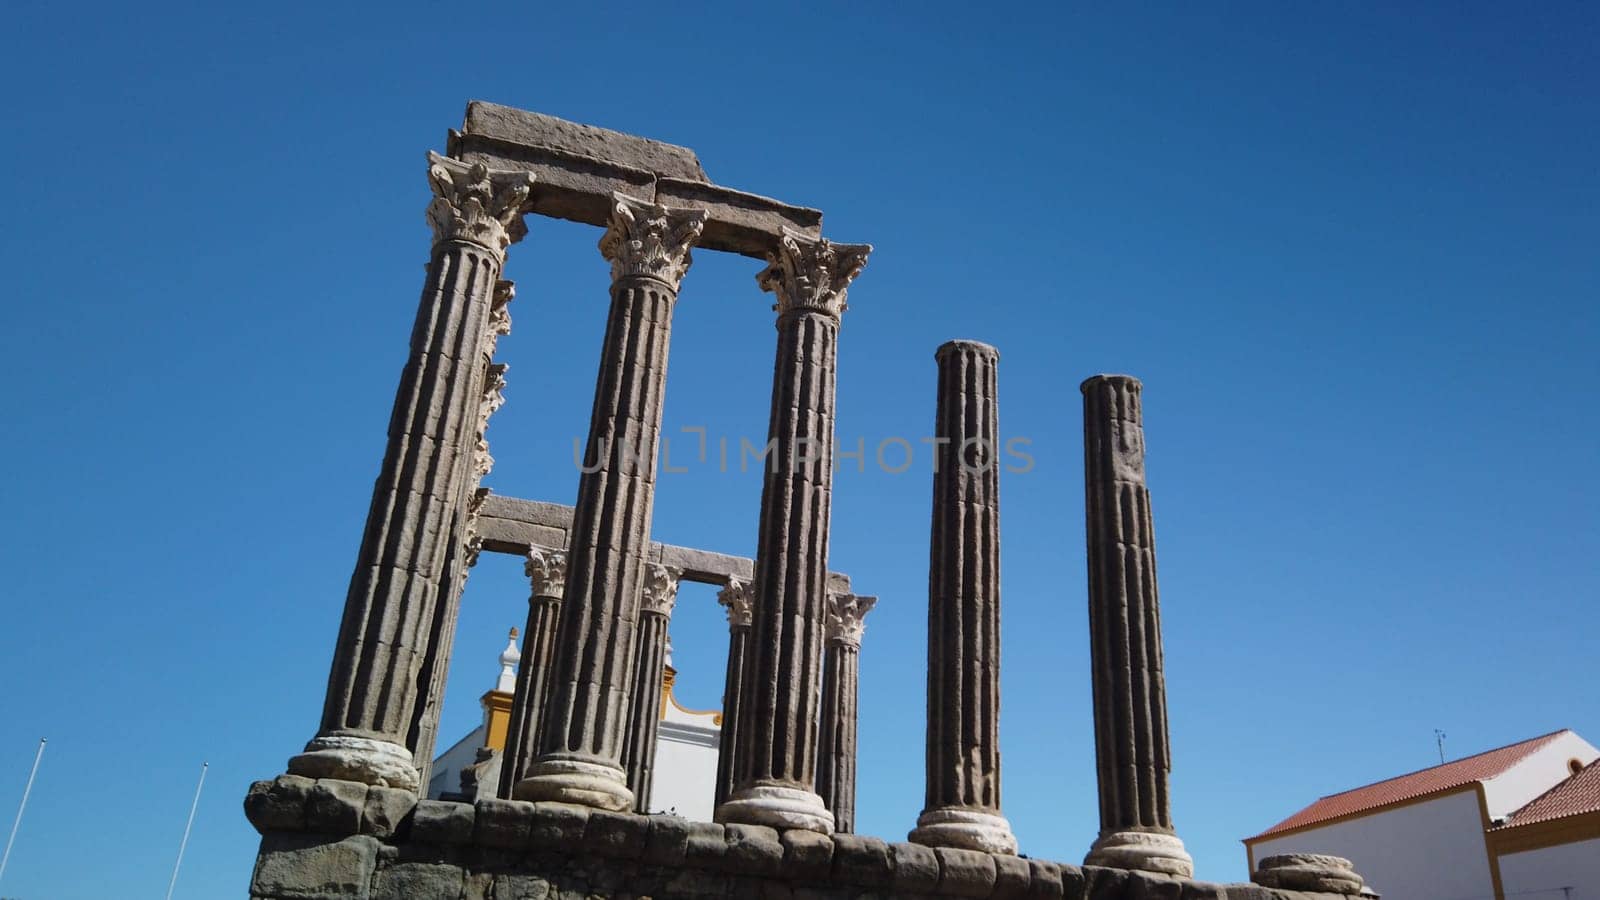 Roman temple of Evora by homydesign